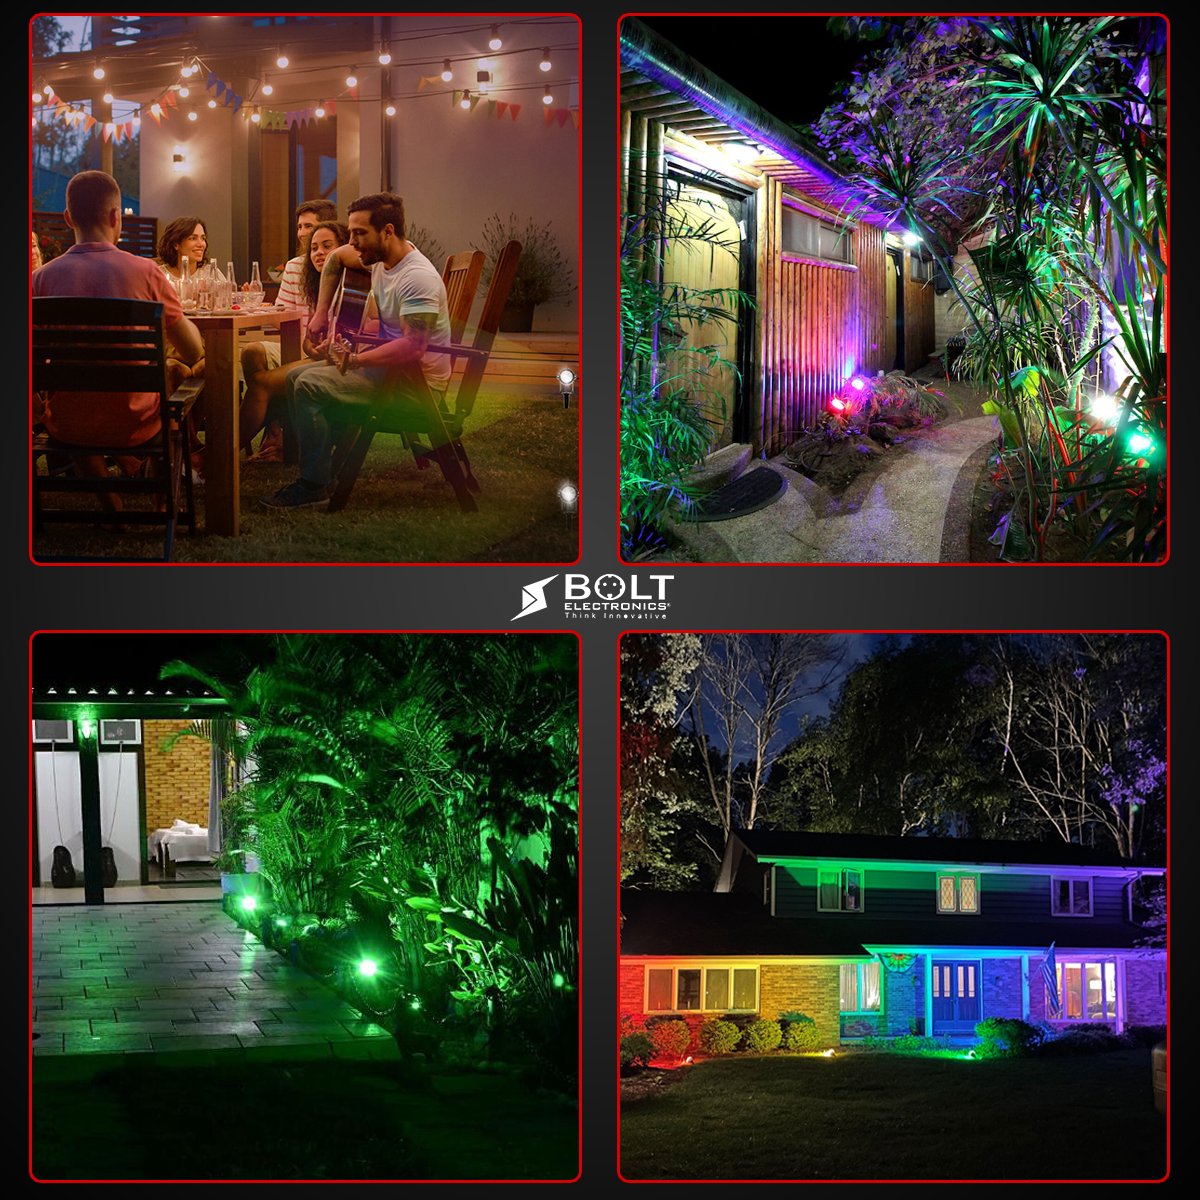 Bolt Electronics®️ RGB LED tuinverlichting Prikspot buitenlamp 4 stuks